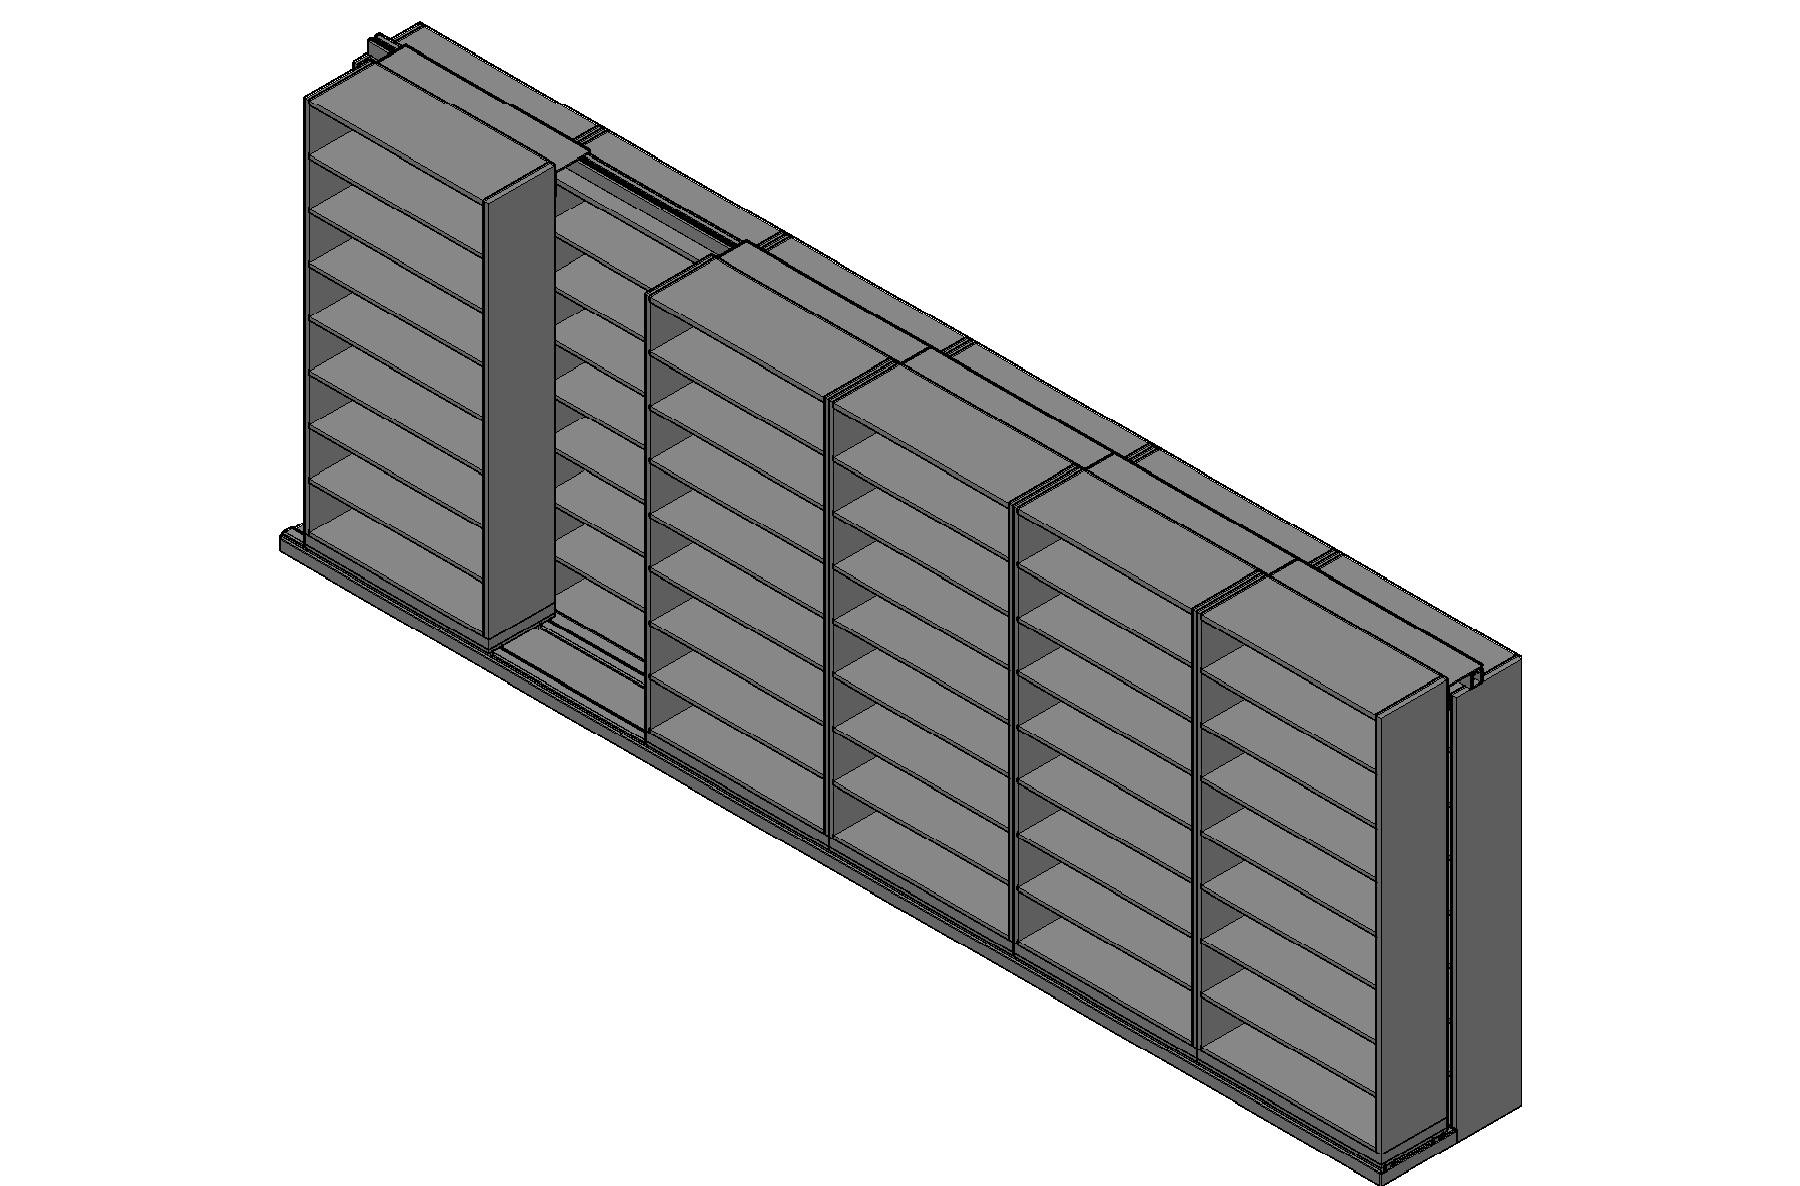 Legal Size Sliding Shelves - 2 Rows Deep - 8 Levels - (42" x 15" Shelves) - 256" Total Width